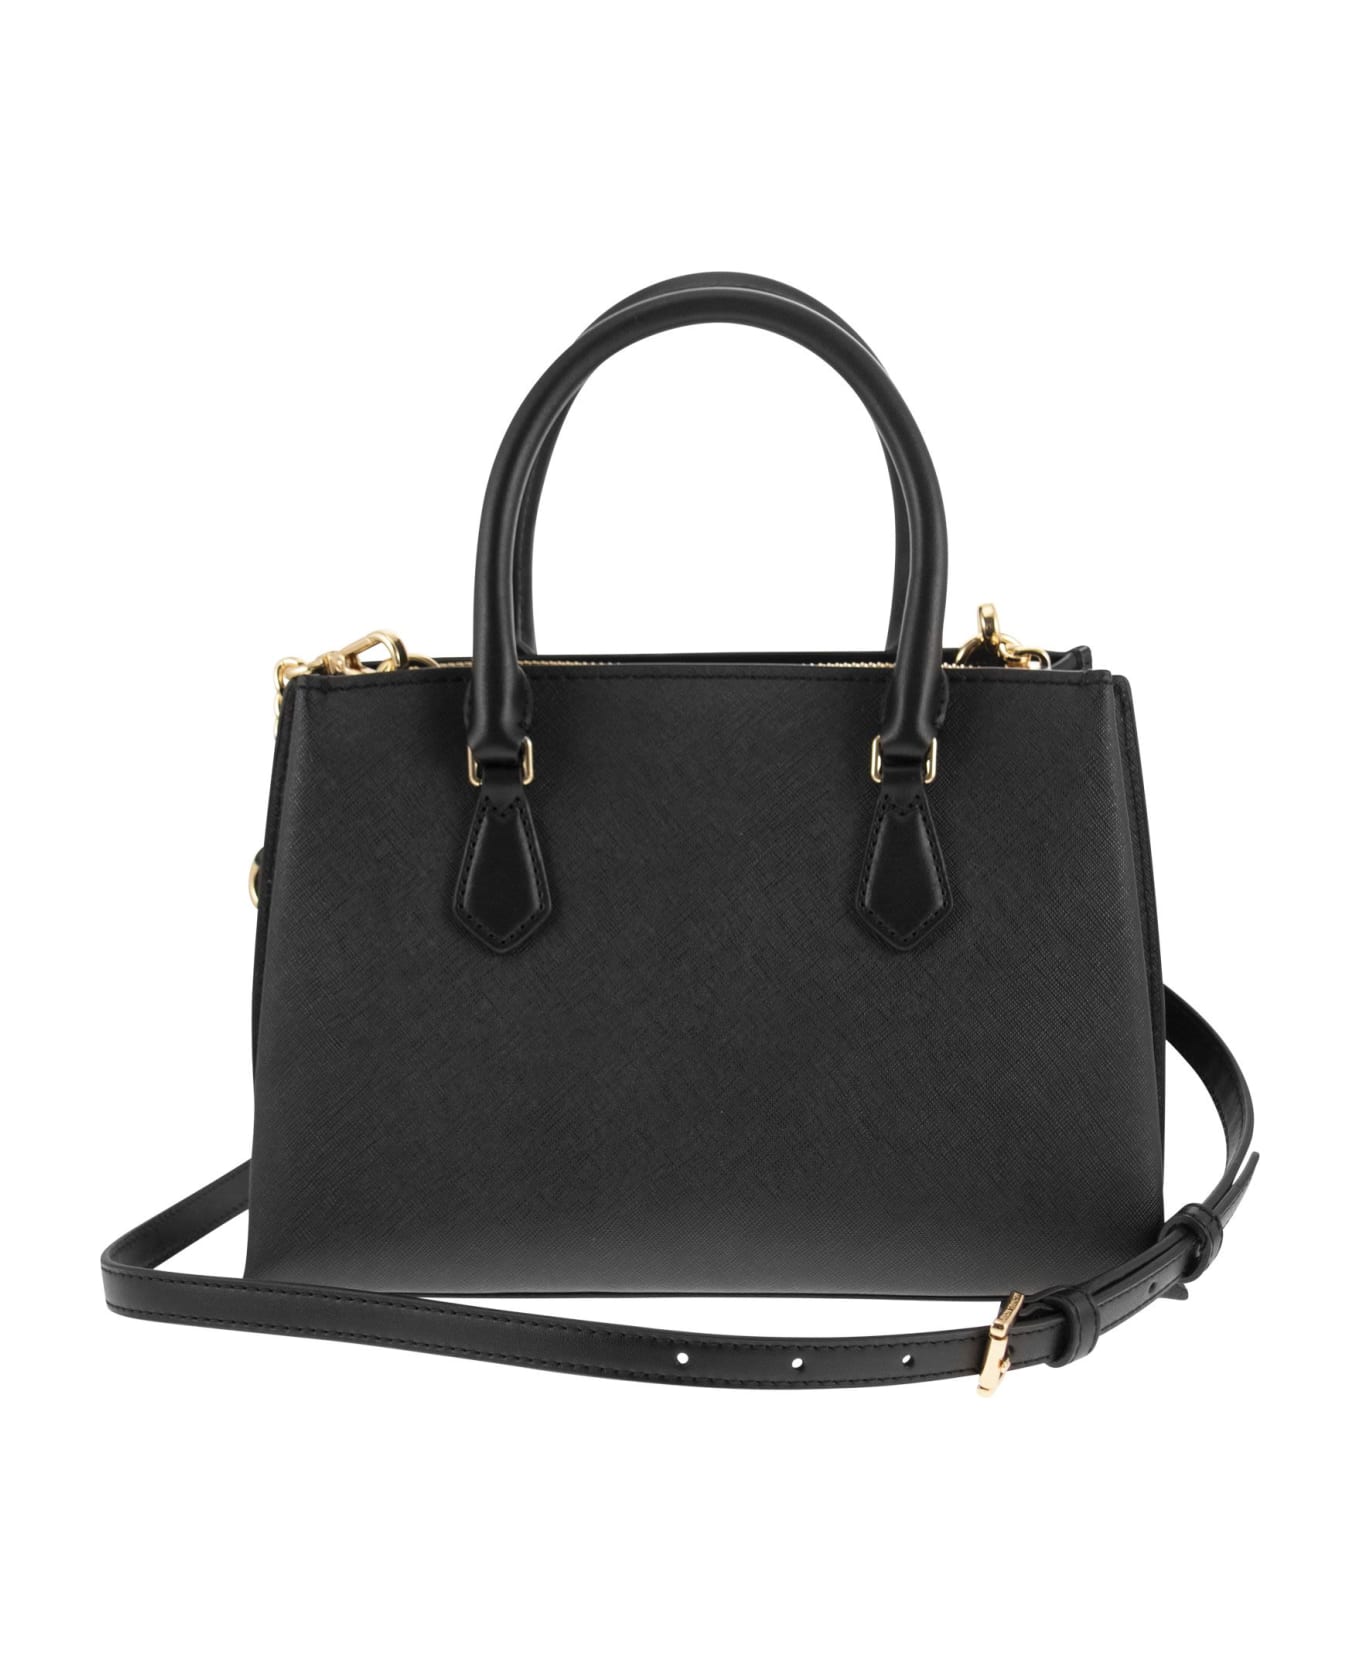 Michael Kors Ruby Leather Handbag - black